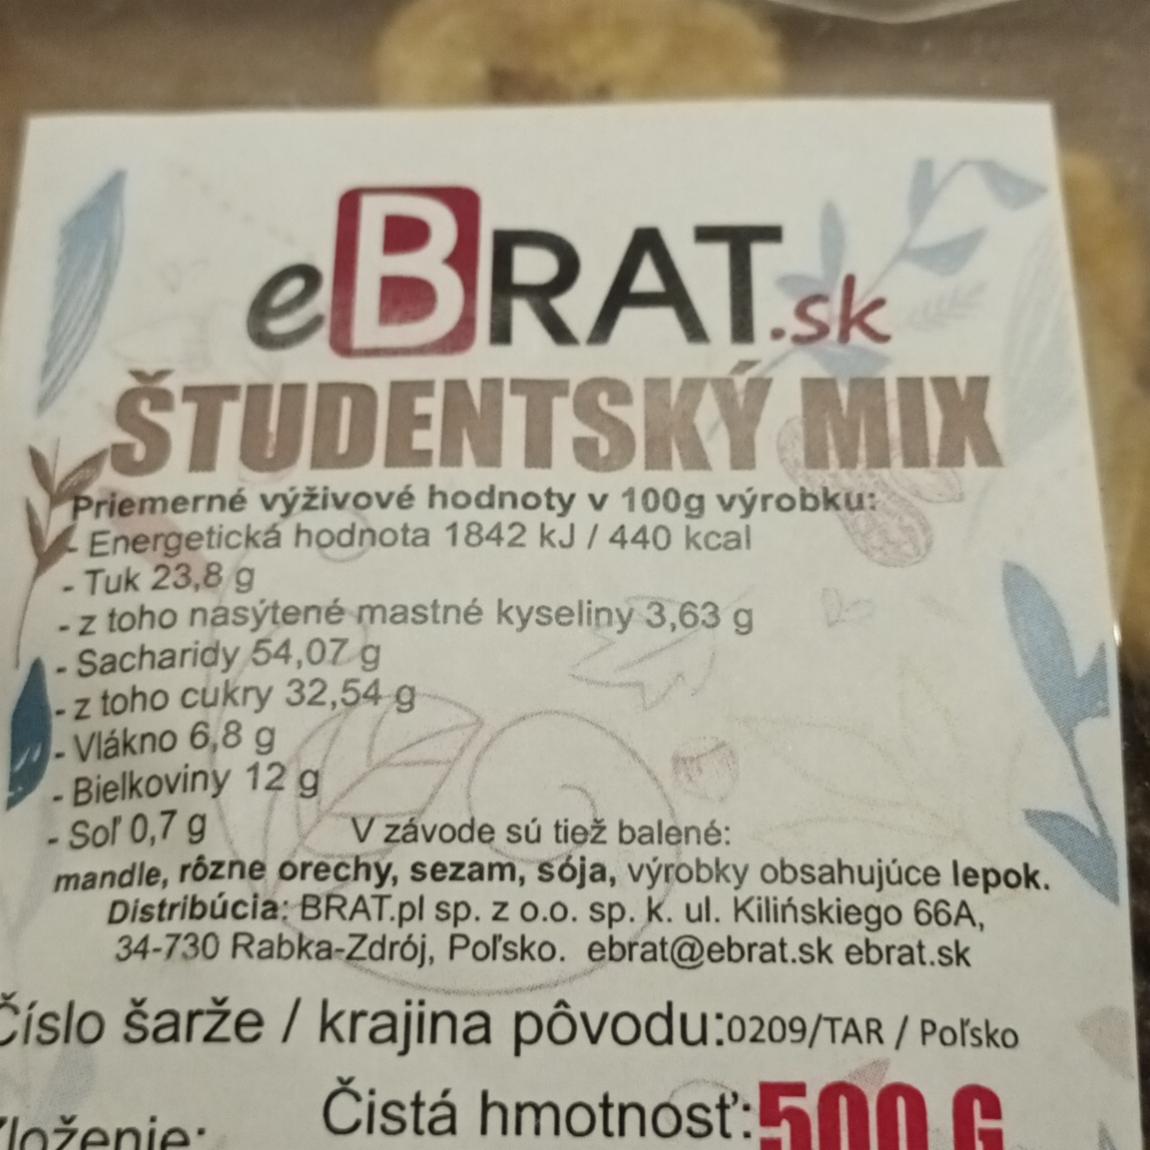 Fotografie - Študentský mix eBrat.sk